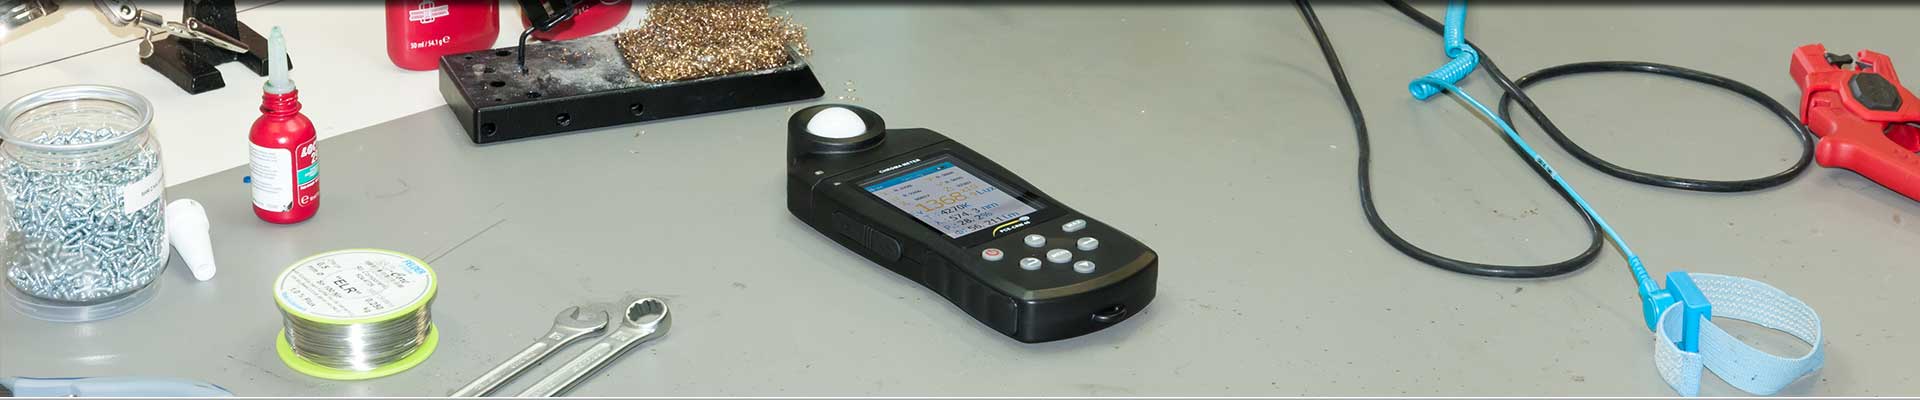 Portable light illuminance measurement instrument for data storage 1-100000 for brightness measurement for transport routes 